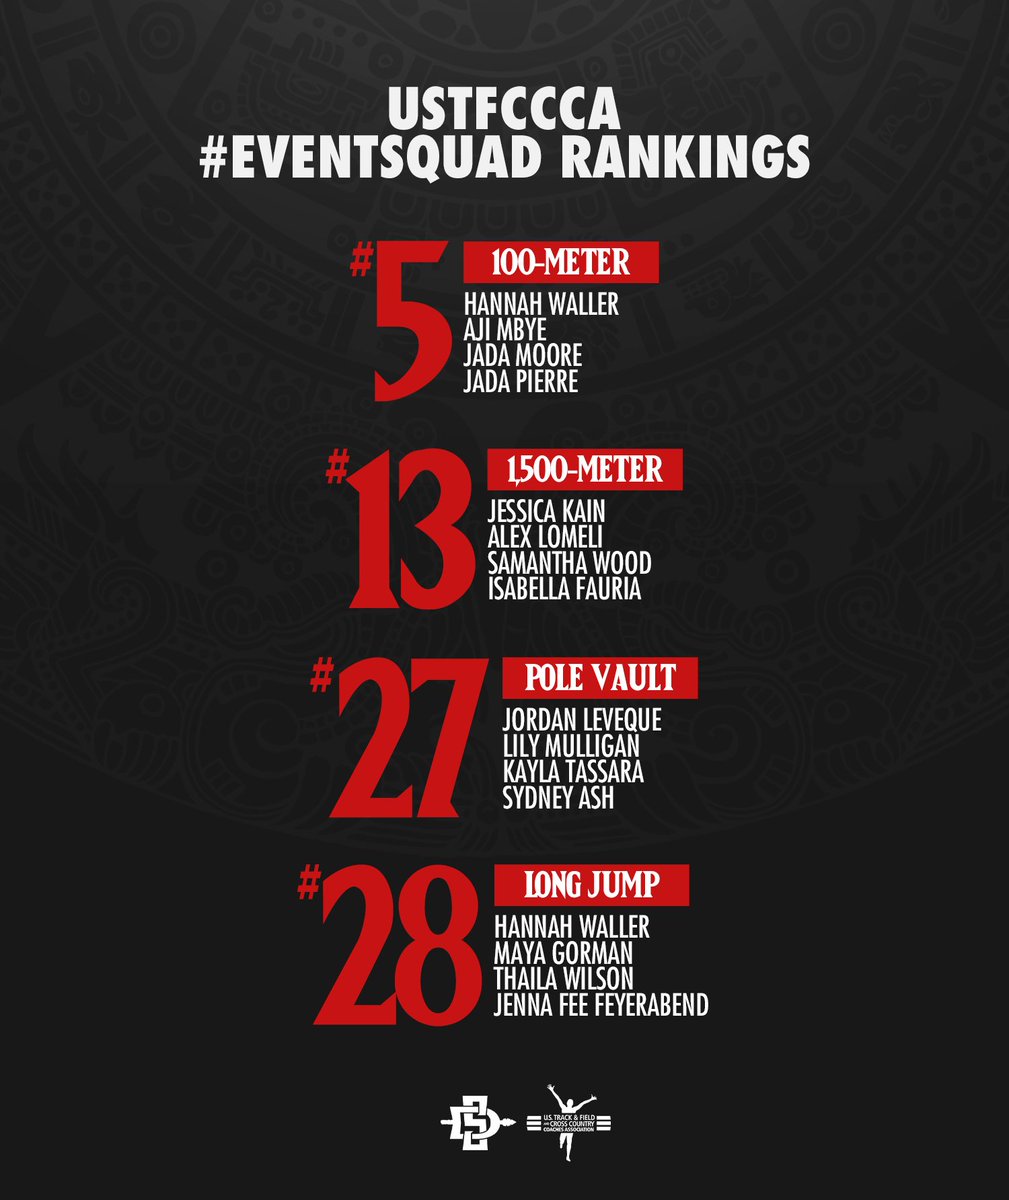 New week, new #EventSquad rankings 👀